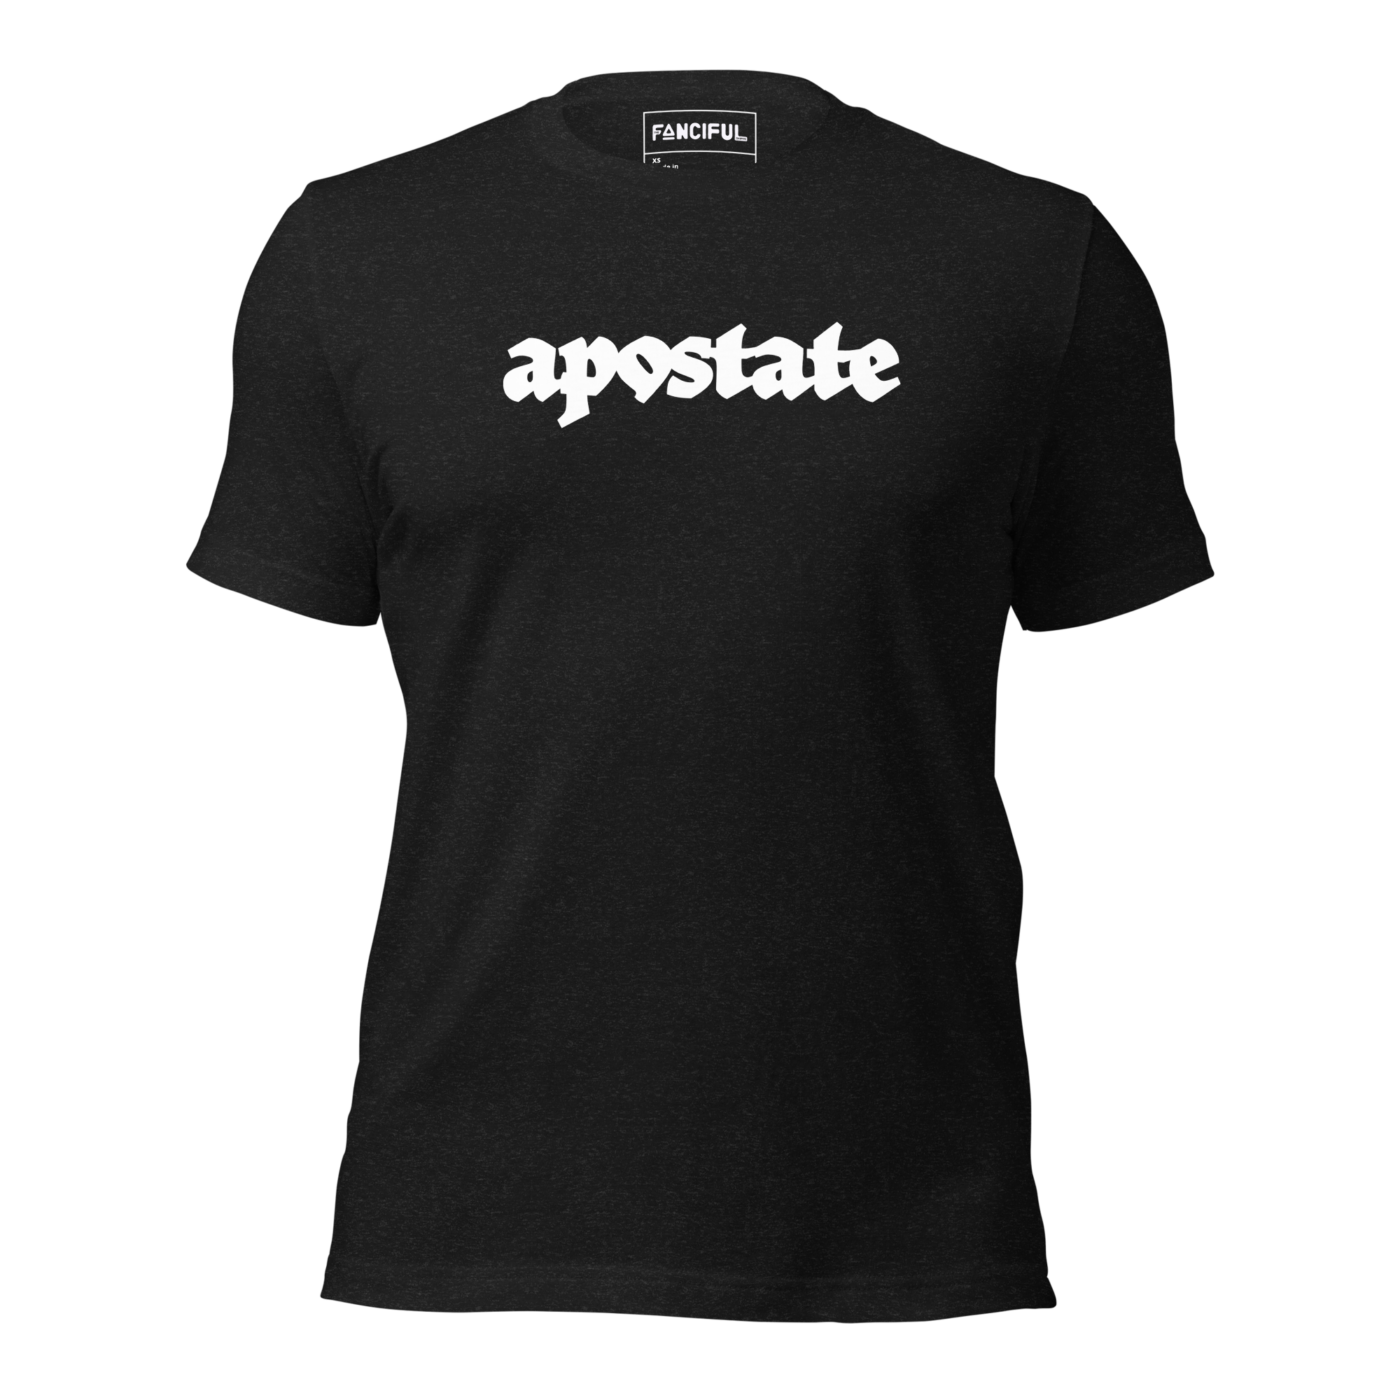 unisex staple t shirt black heather front 64c1c600c3560